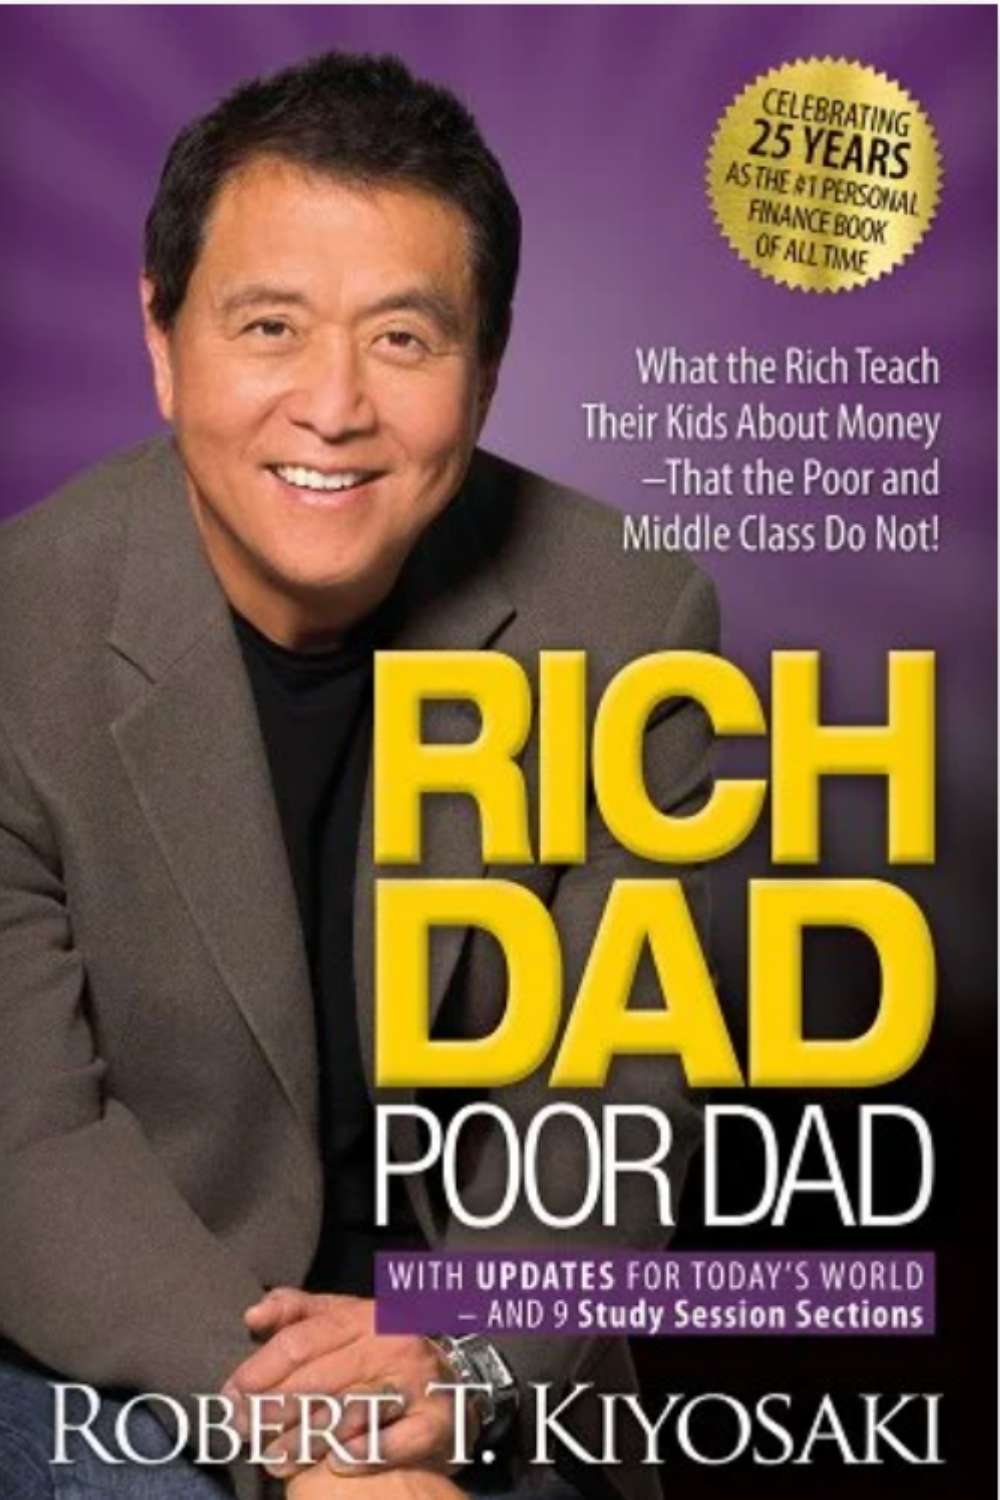 Rich Dad Poor Dad: Robert Kiyosaki's book on personal finance.